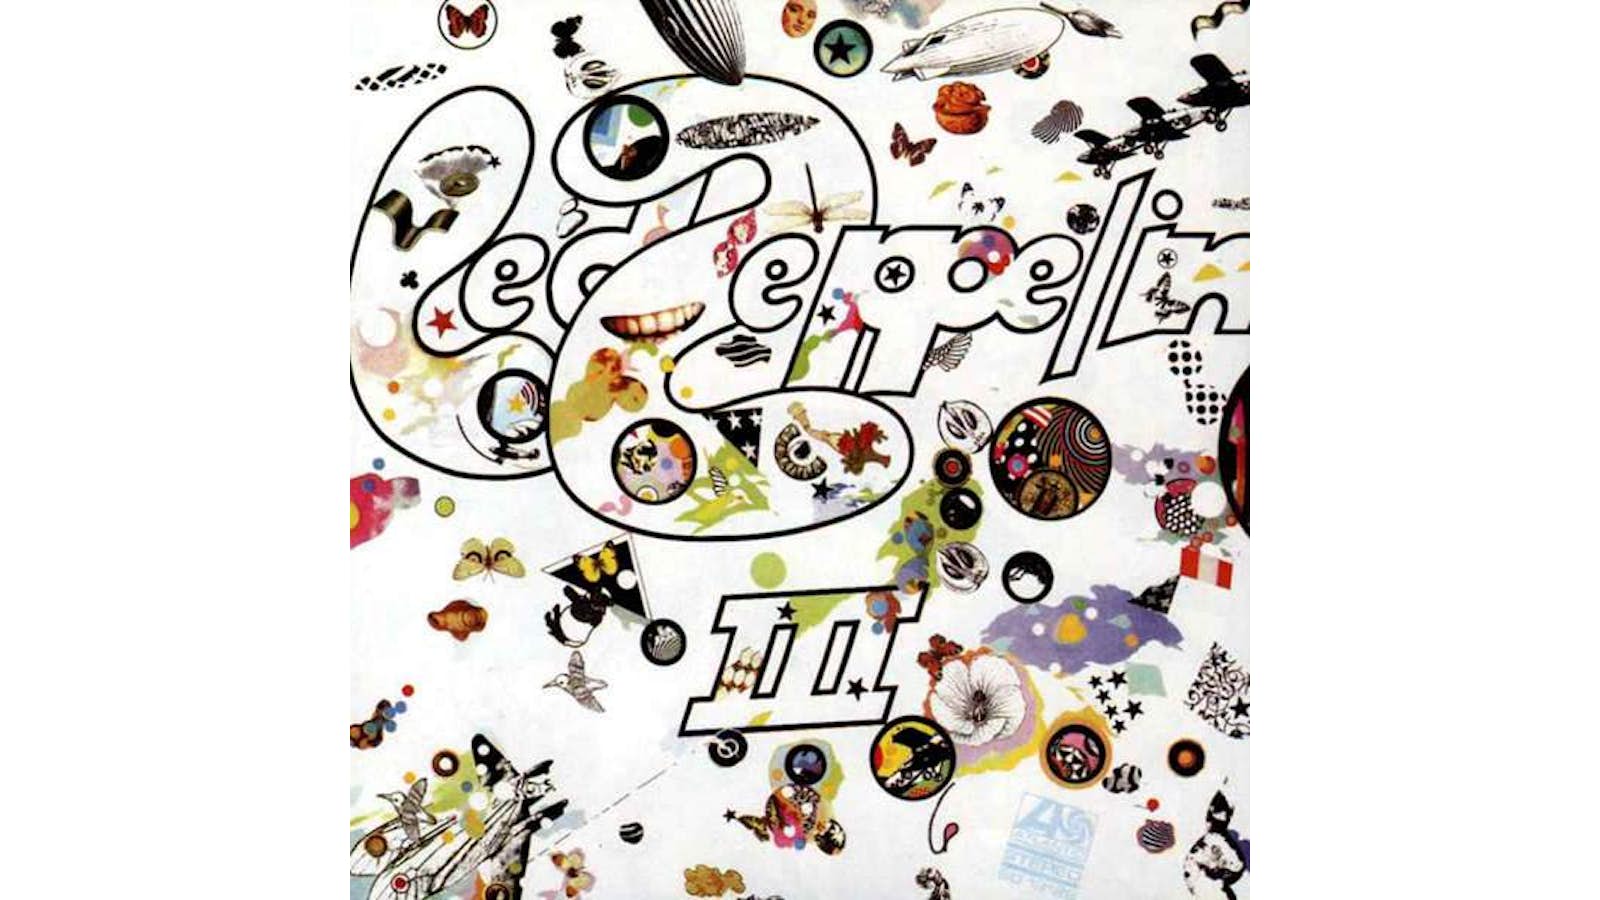 Led Zeppelin - Vinilo Led Zeppelin Iii (Vinilo Original Remasterizado )